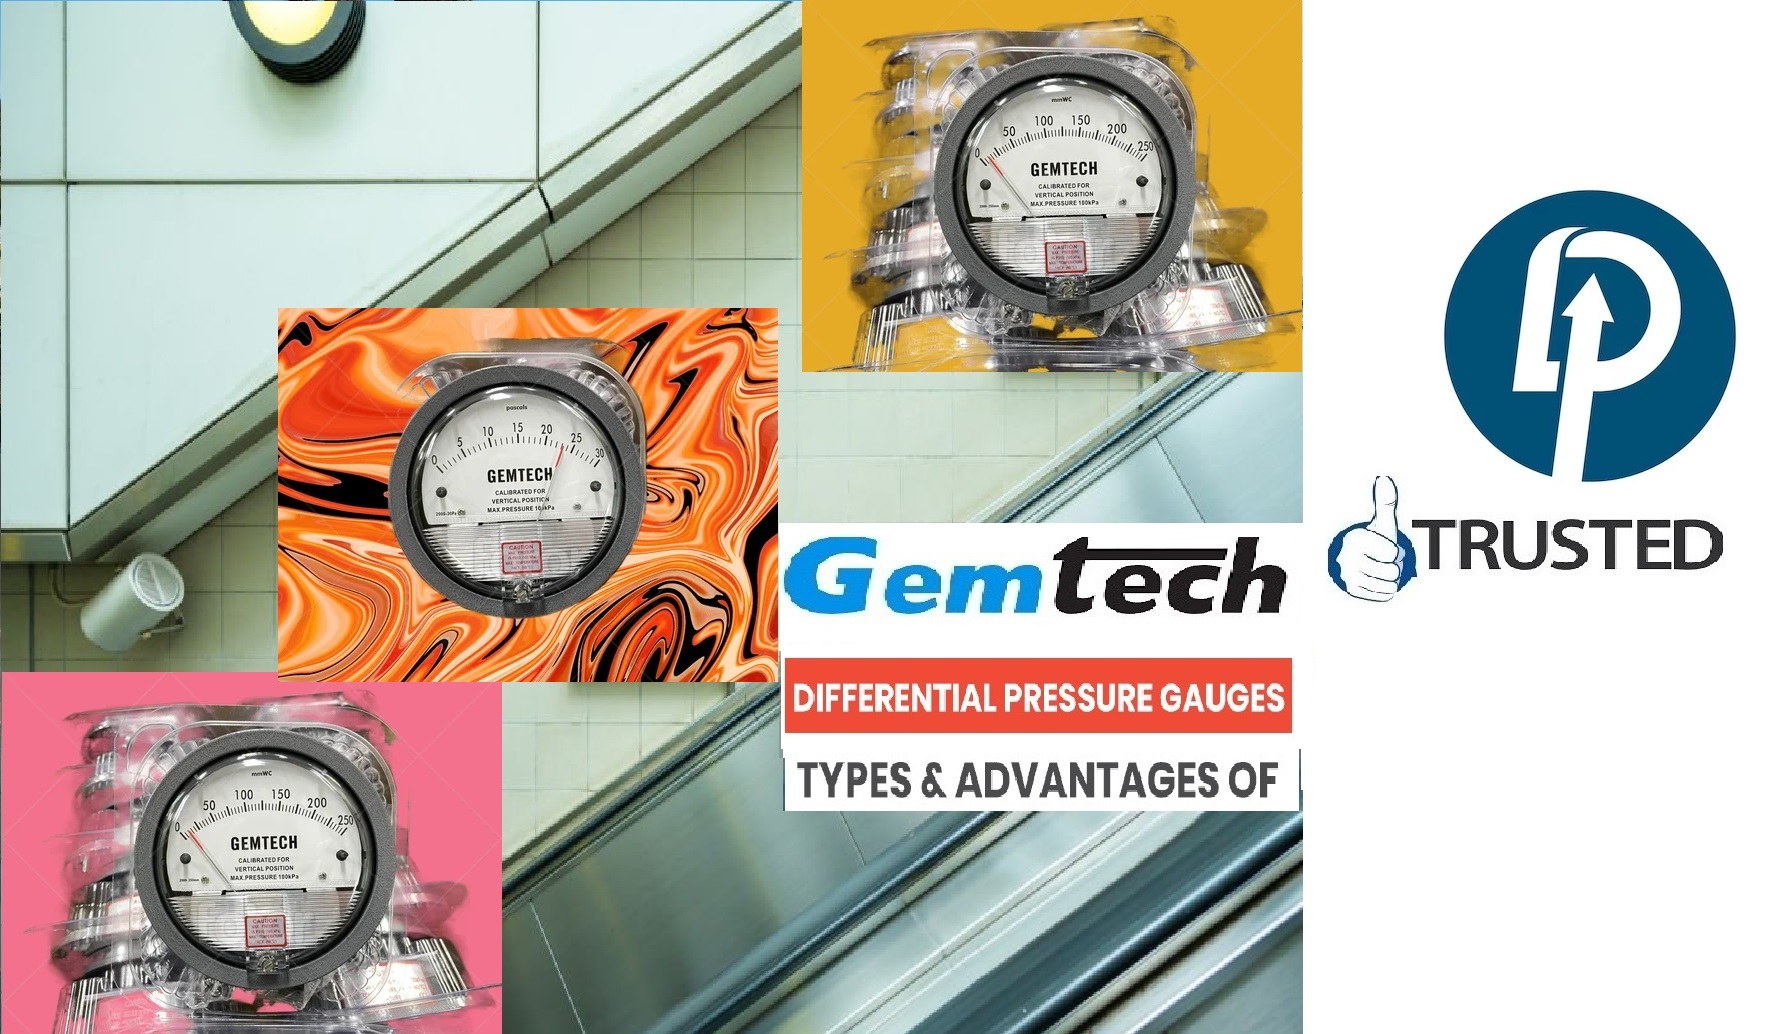 Model G2300-12MM Gemtech Differential pressure Gauges by Range 6-0-6 mm wc